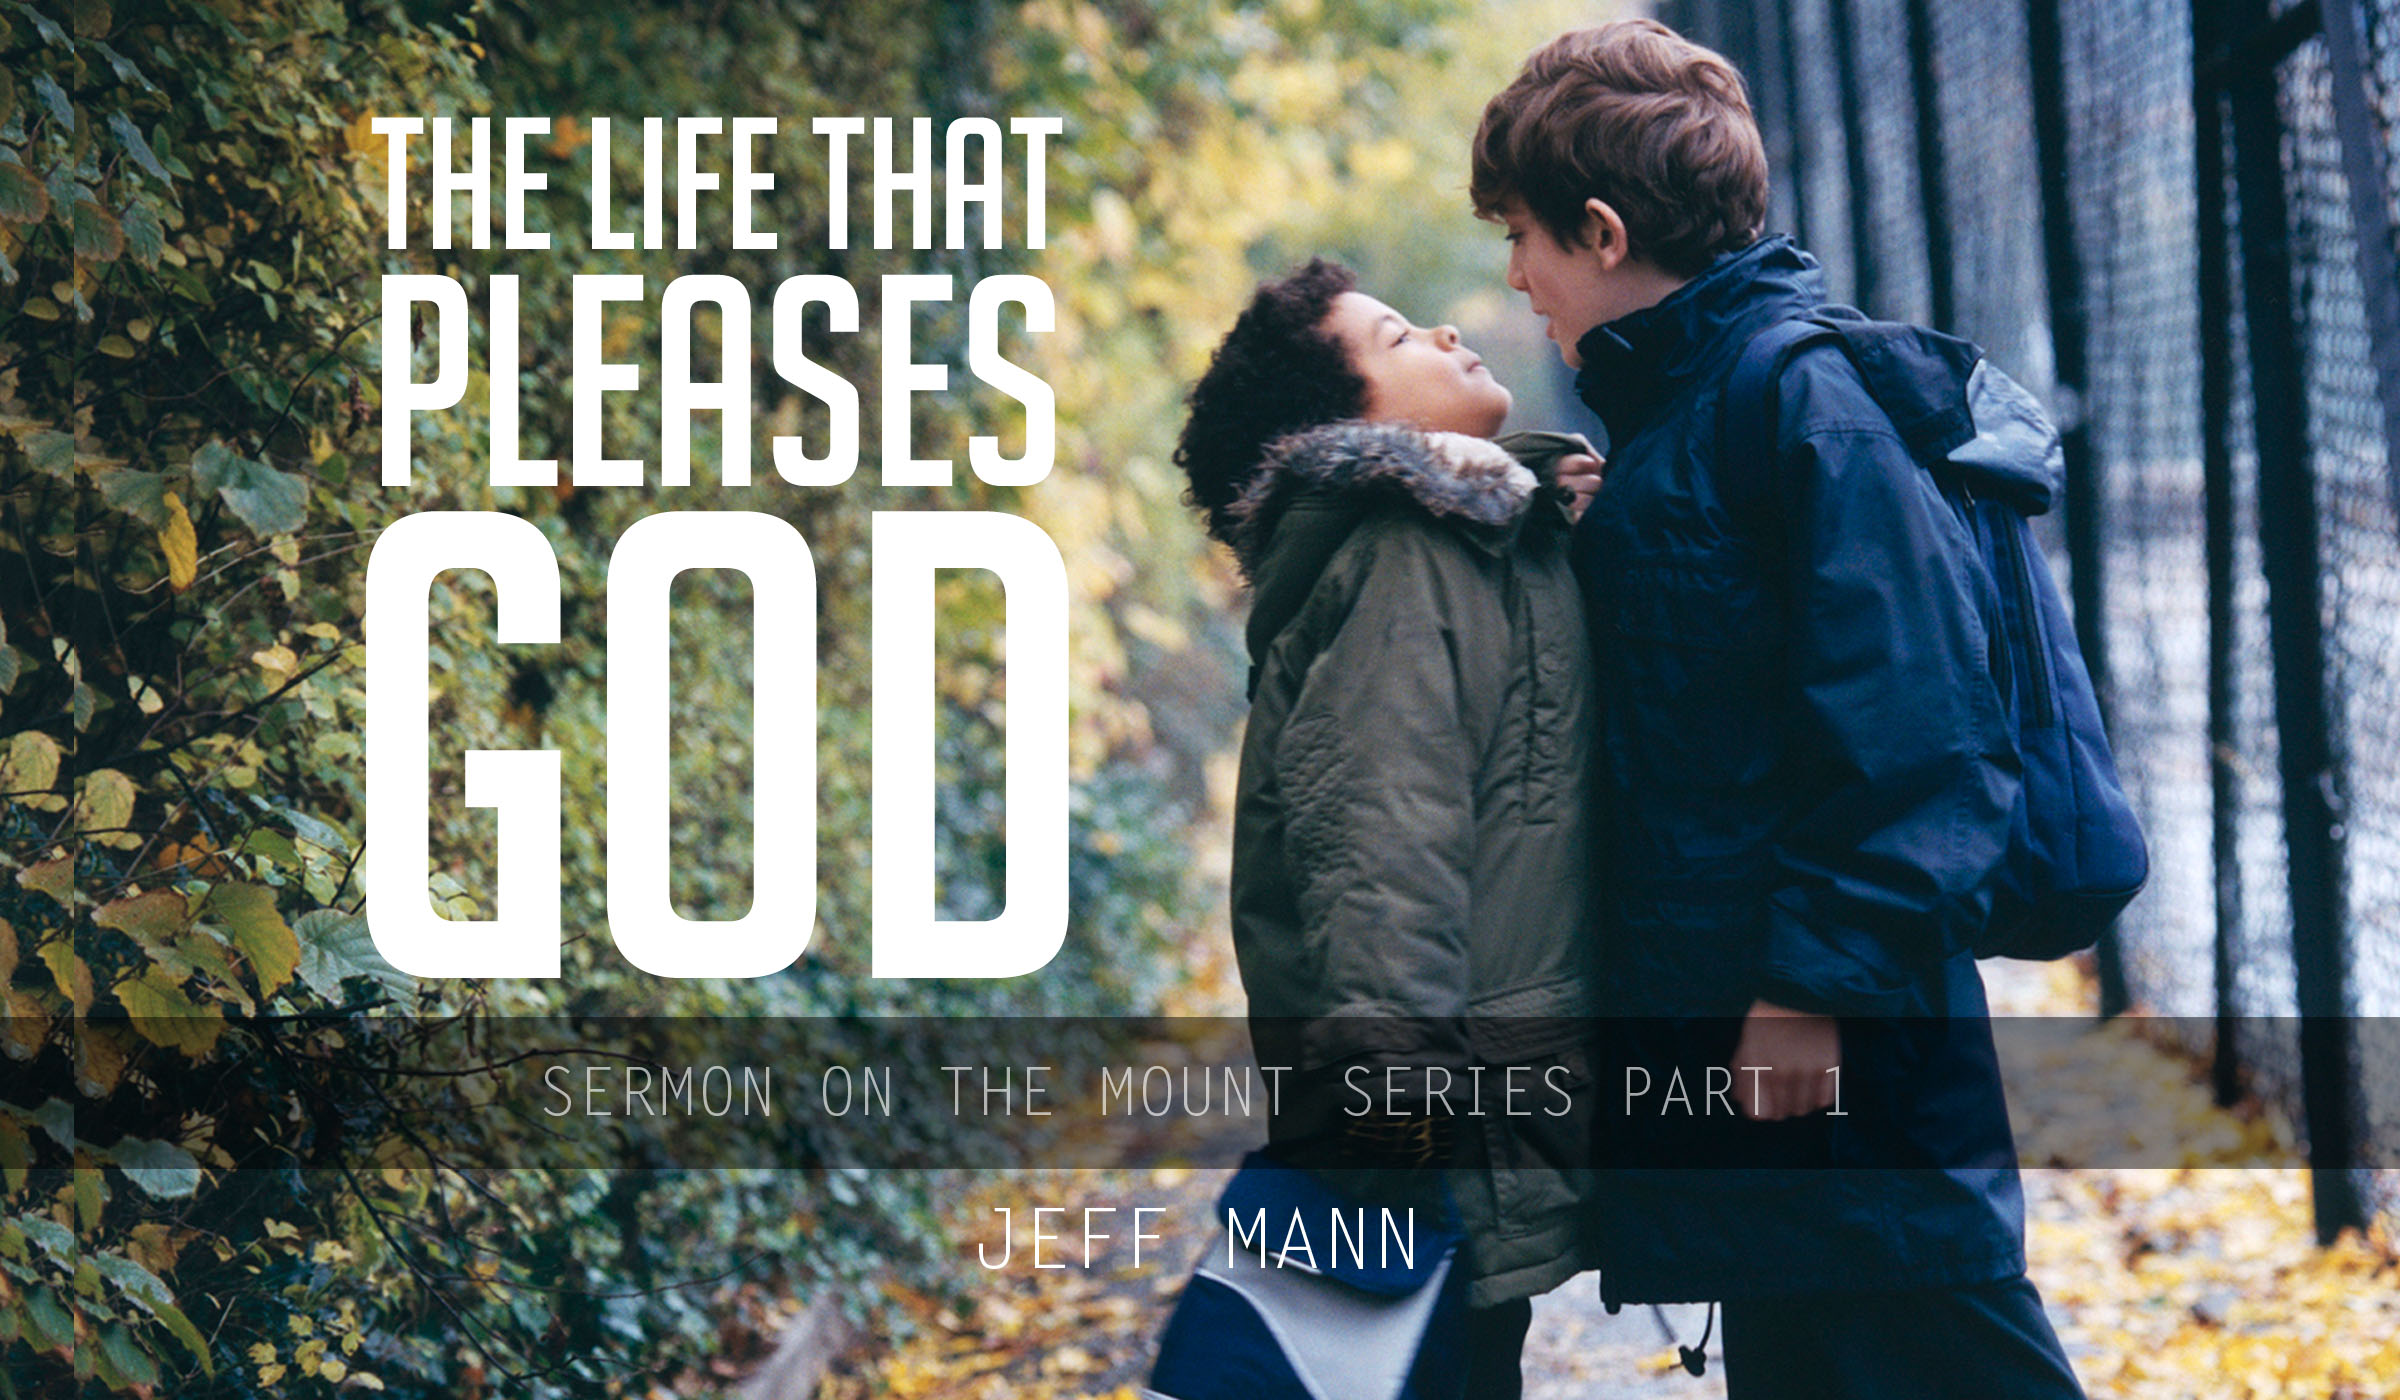 The Life that Pleases God – Sermon on the Mount series Part 1 – Jeff Mann